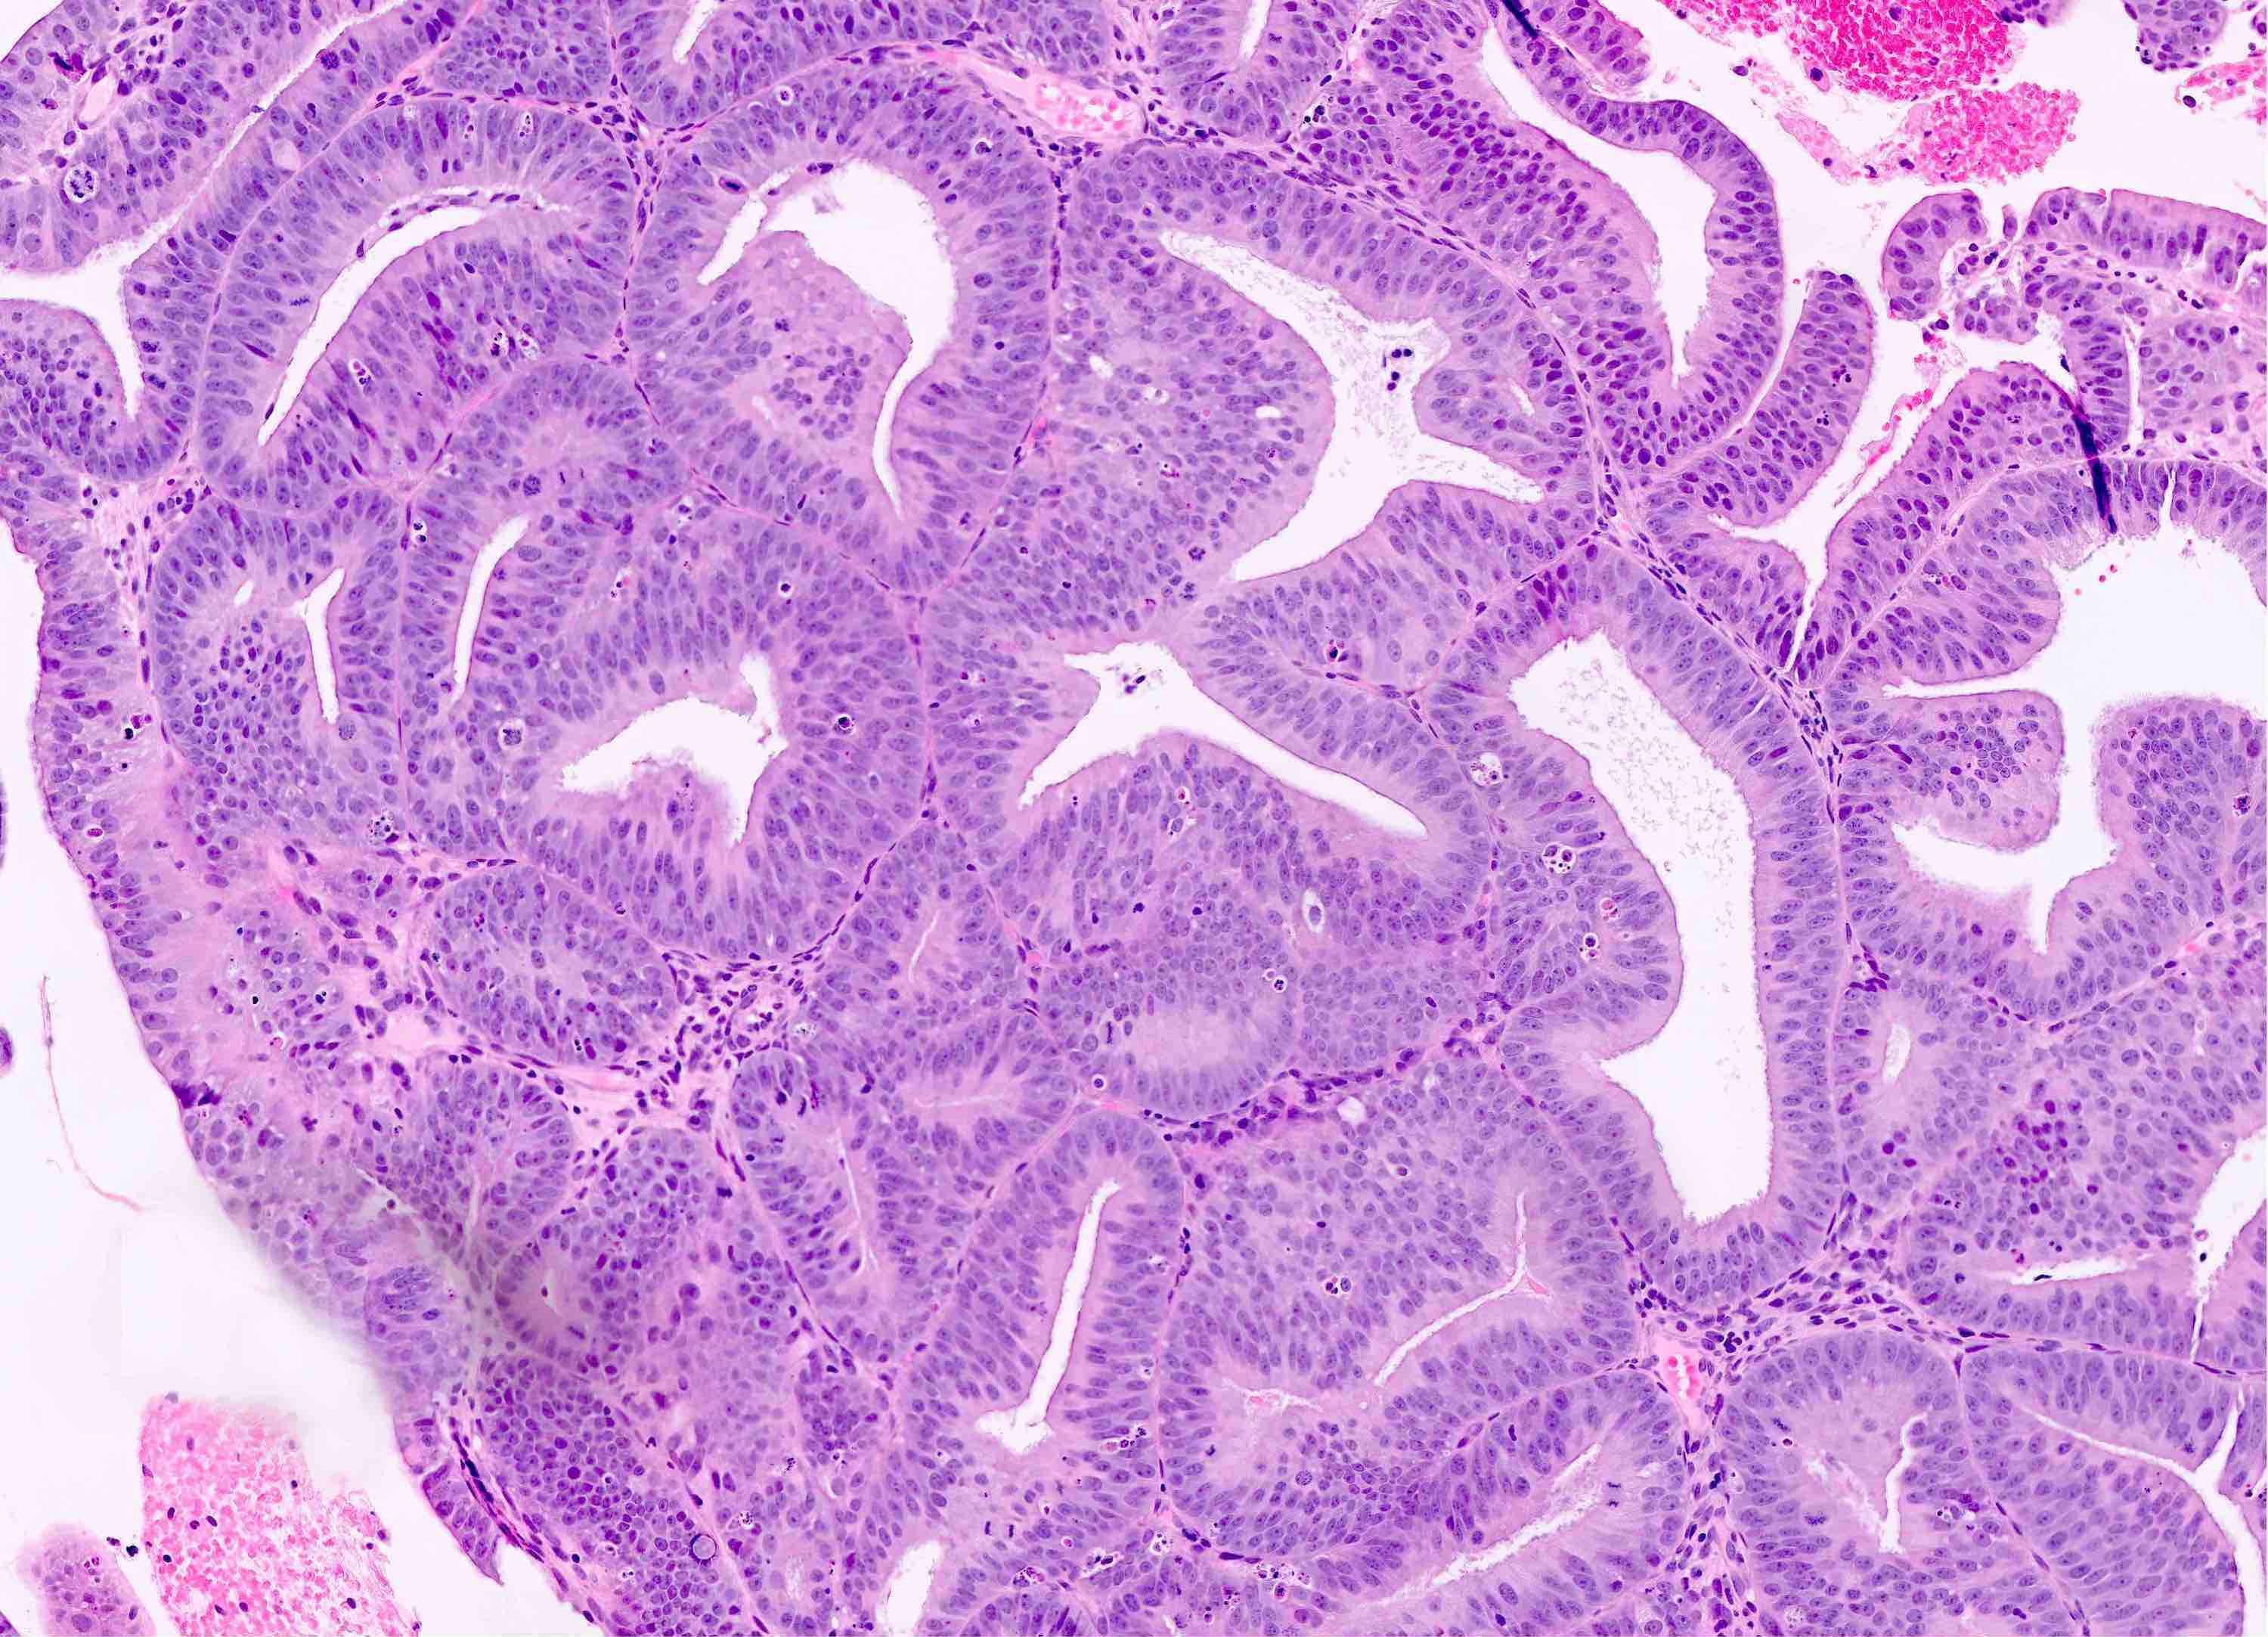 endometrial cancer pathology outlines